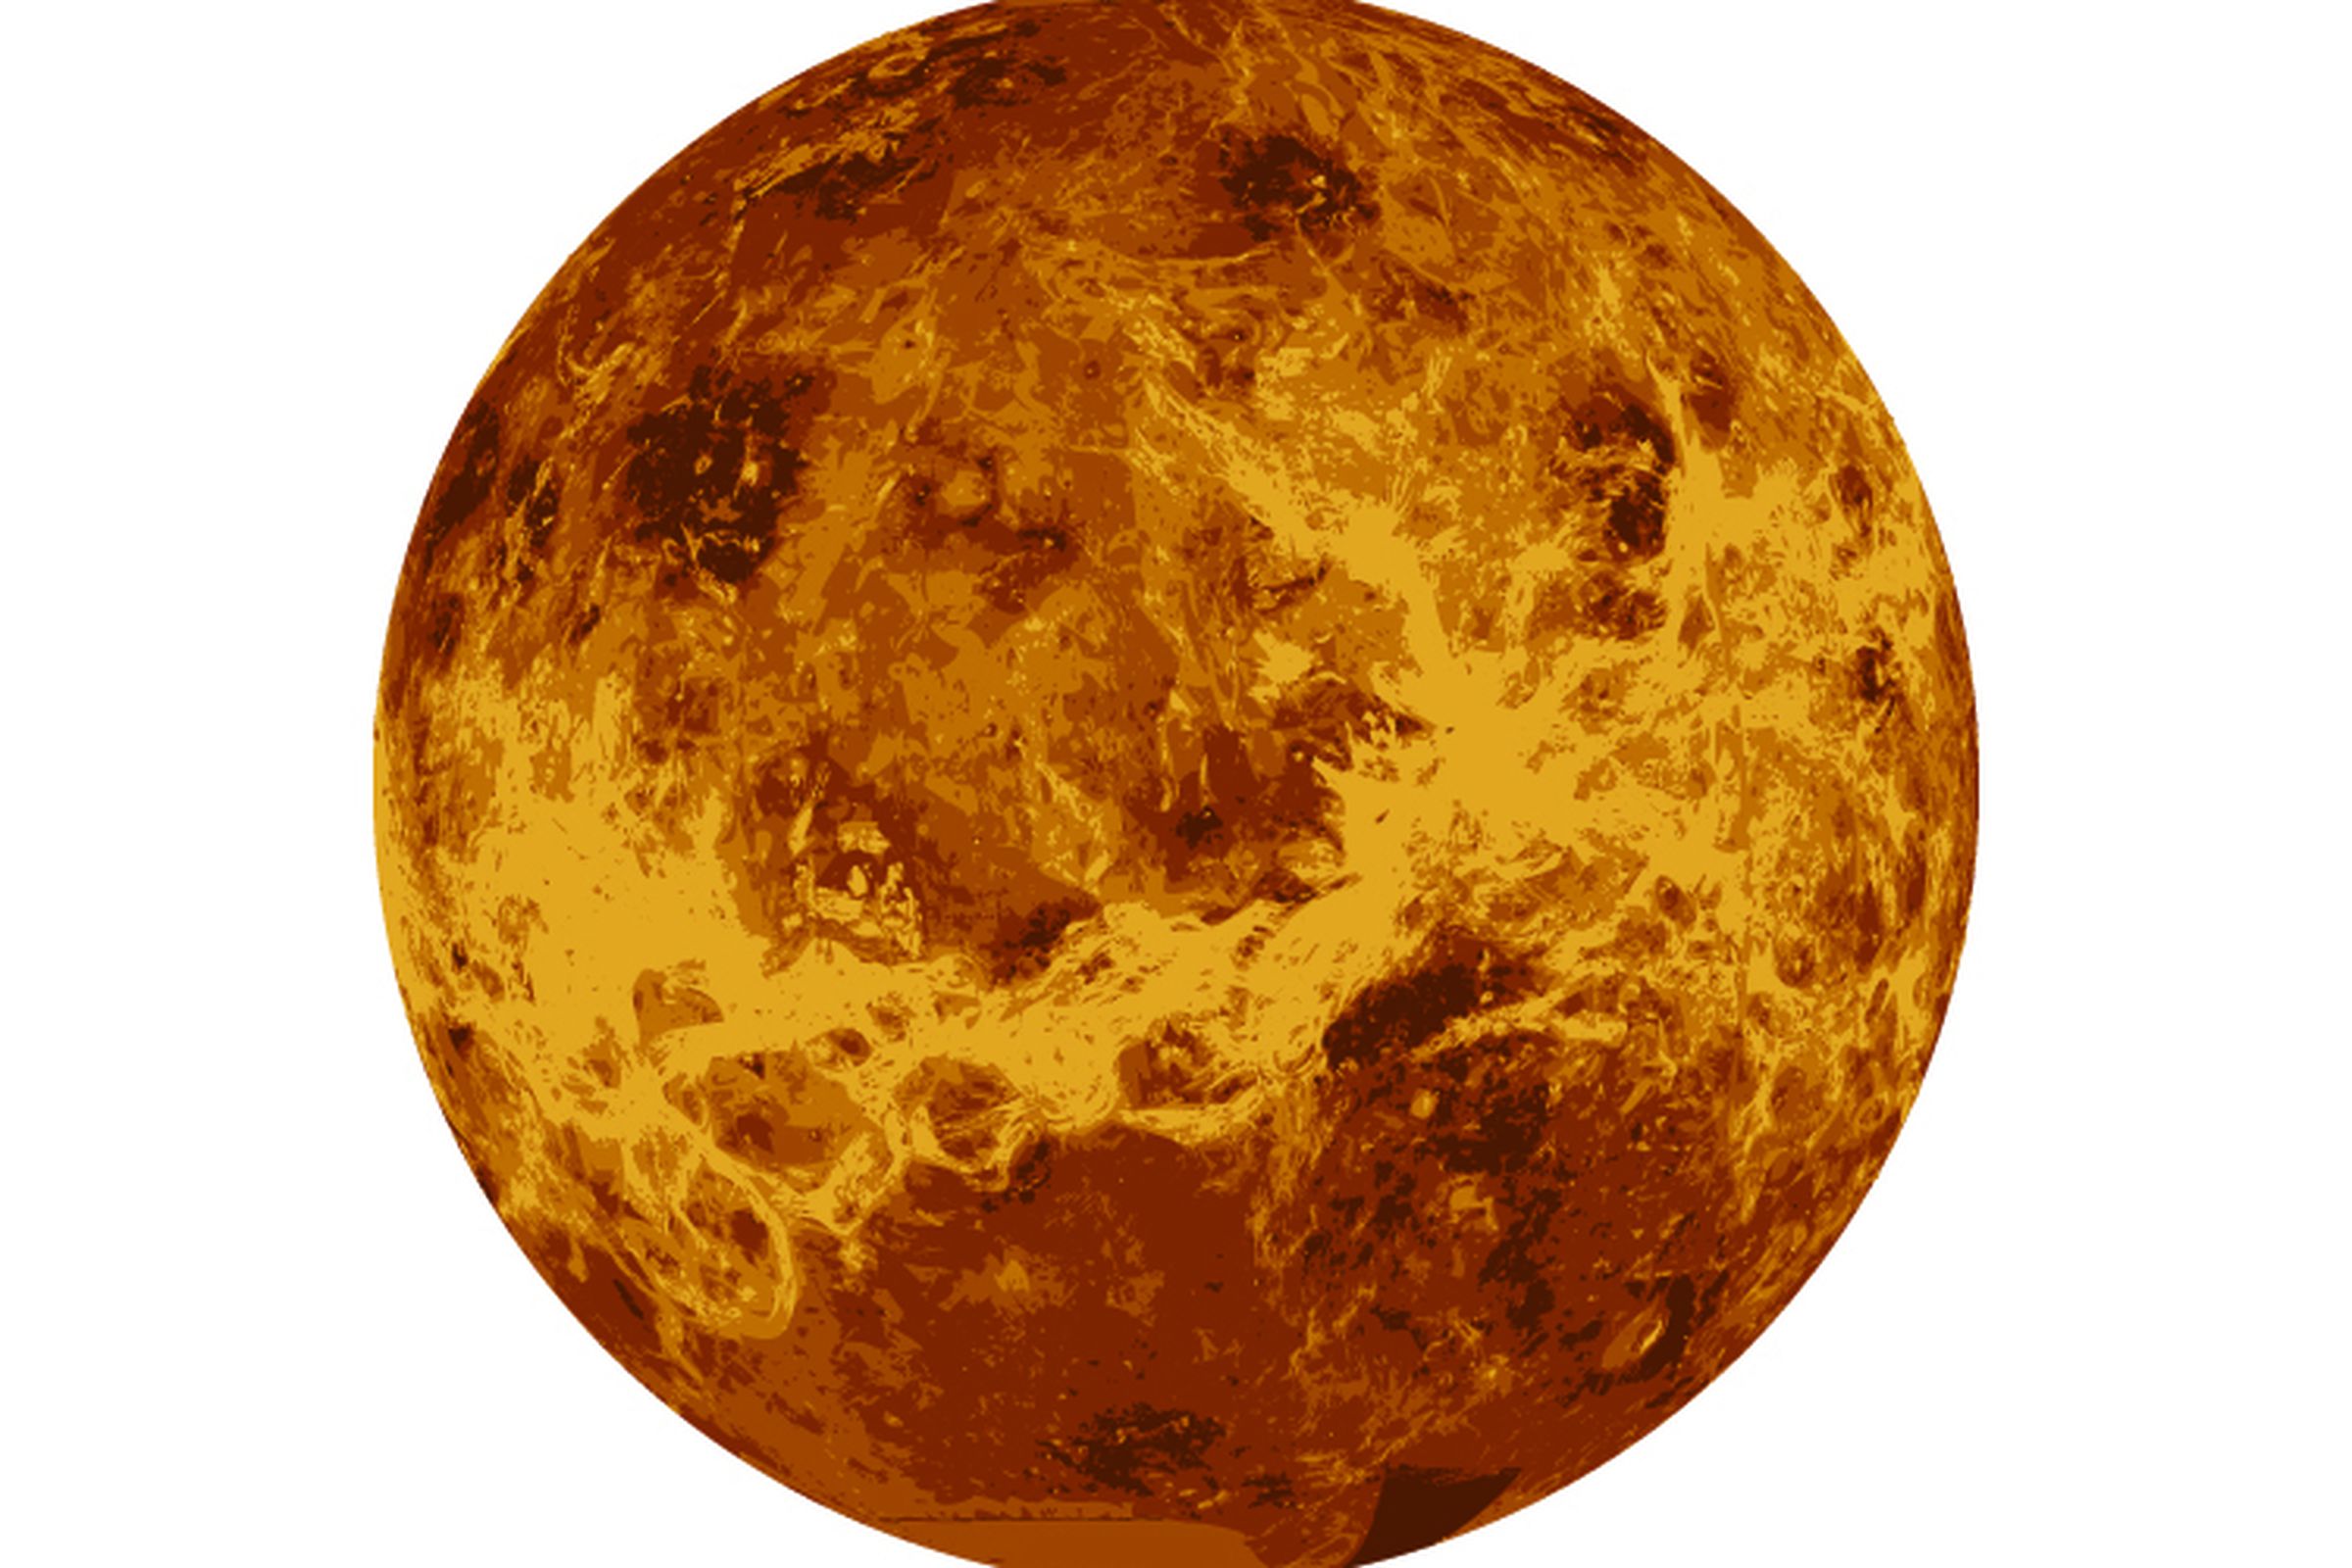 Venus (SHUTTERSTOCK)